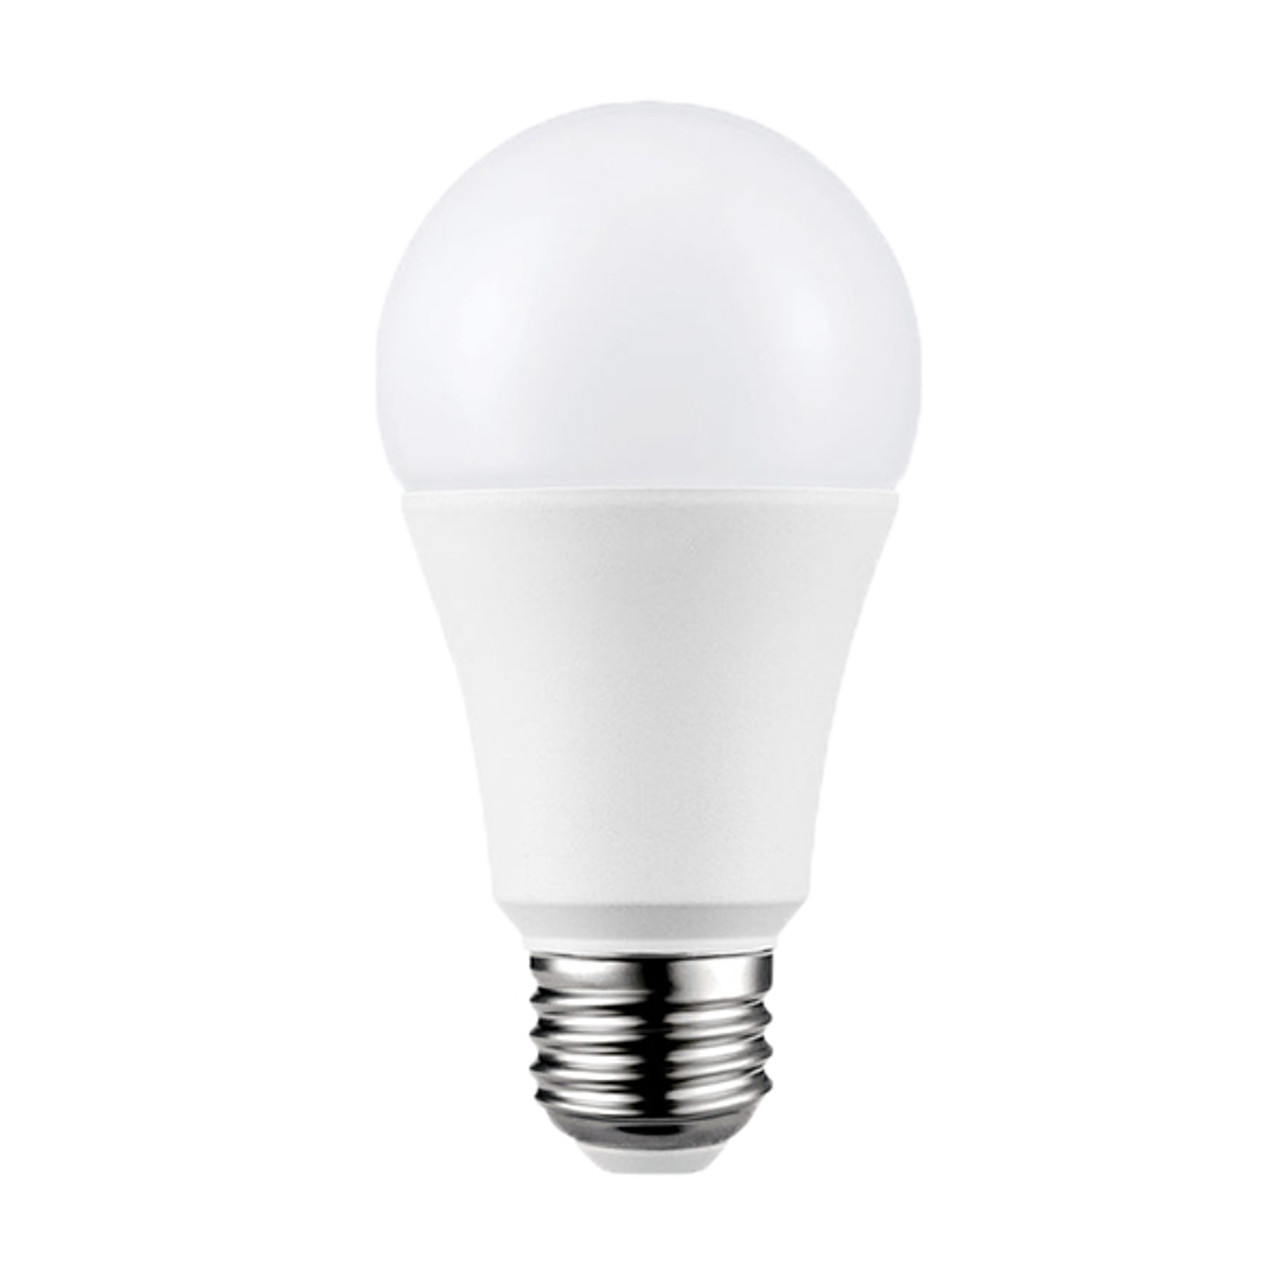 Vilje komplet Beregn 17 Watt A21 LED Bulb High Lumen